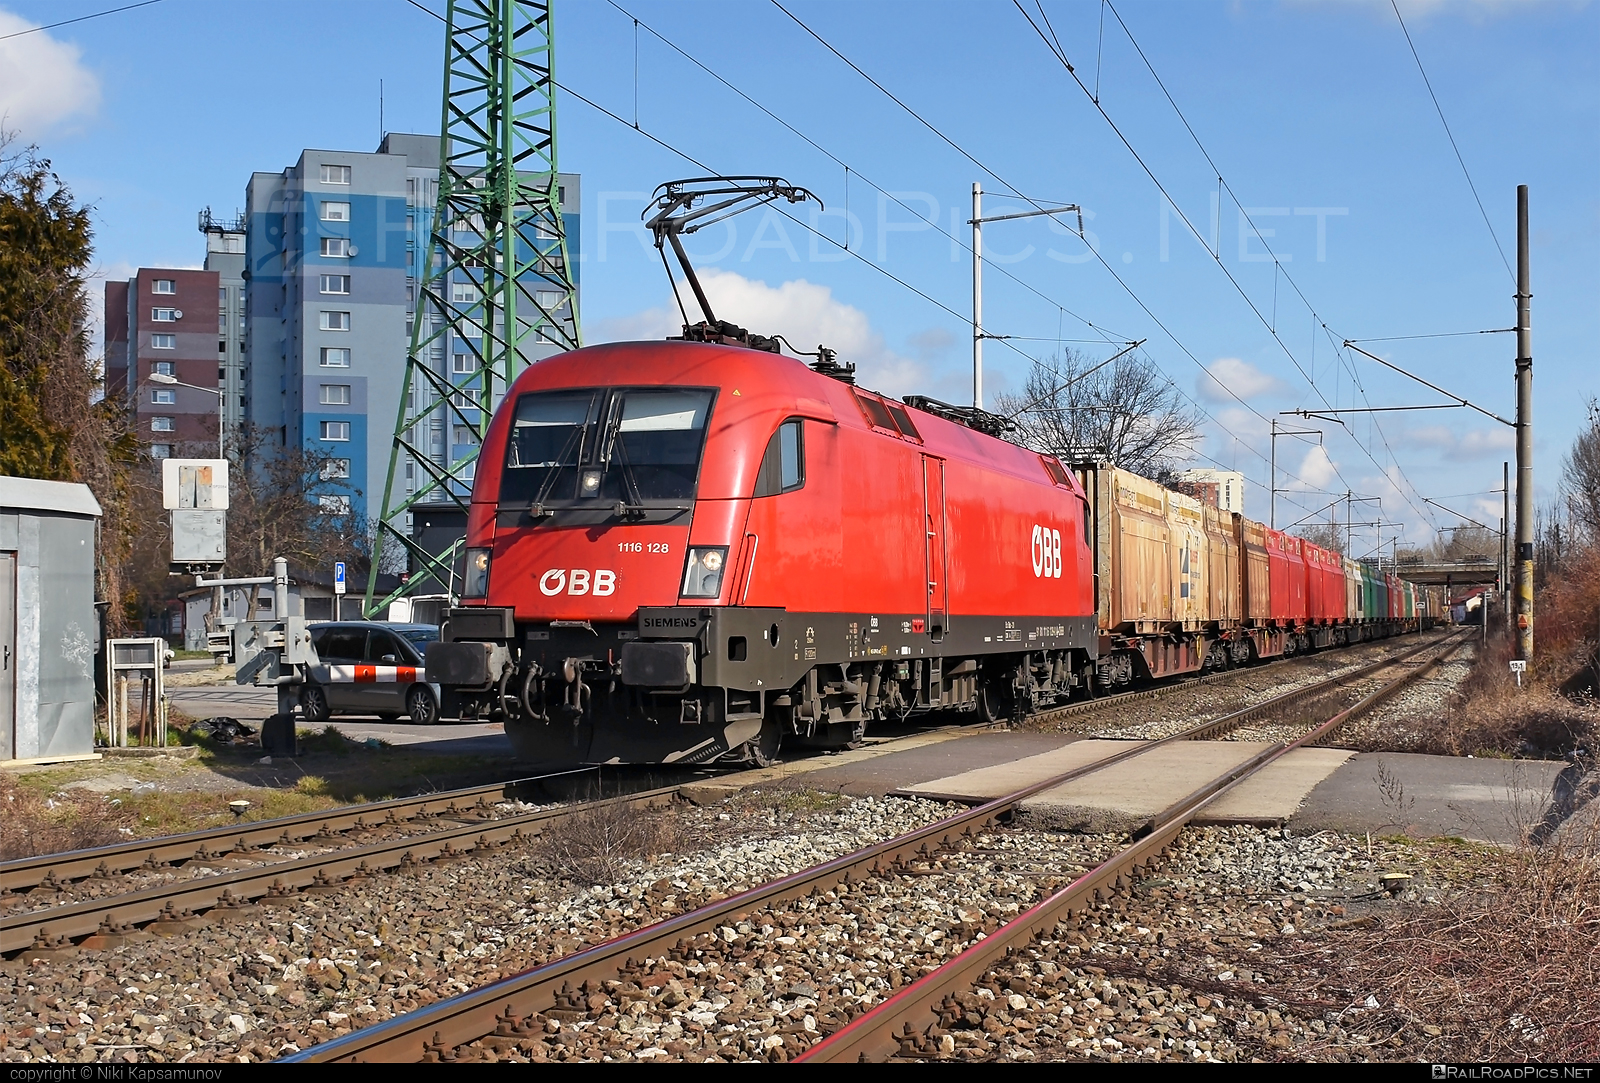 Siemens ES 64 U2 - 1116 128 operated by Rail Cargo Austria AG #es64 #es64u2 #eurosprinter #flatwagon #obb #osterreichischebundesbahnen #rcw #siemens #siemensEs64 #siemensEs64u2 #siemenstaurus #taurus #tauruslocomotive